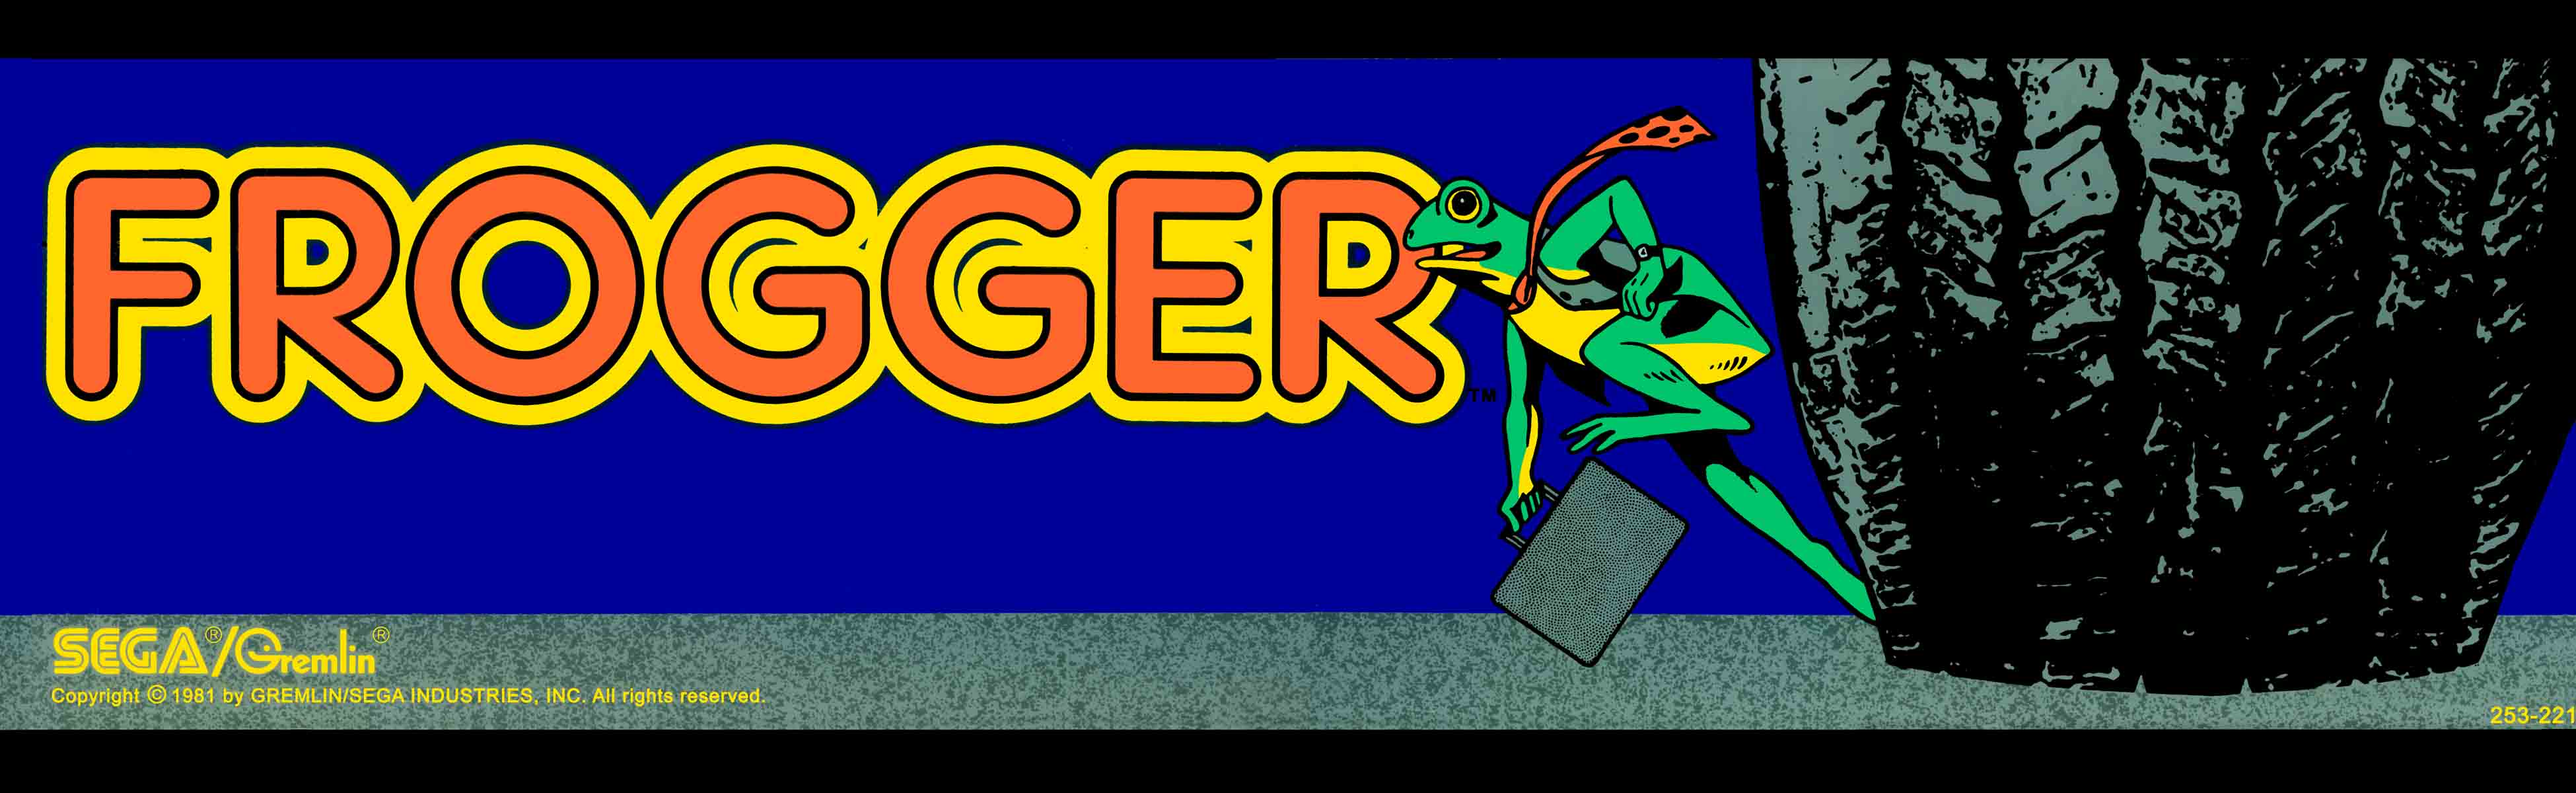 General 3900x1200 arcade cabinet video game art arcade marquee Frogger Sega multiple display digital art watermarked 1981 (year)